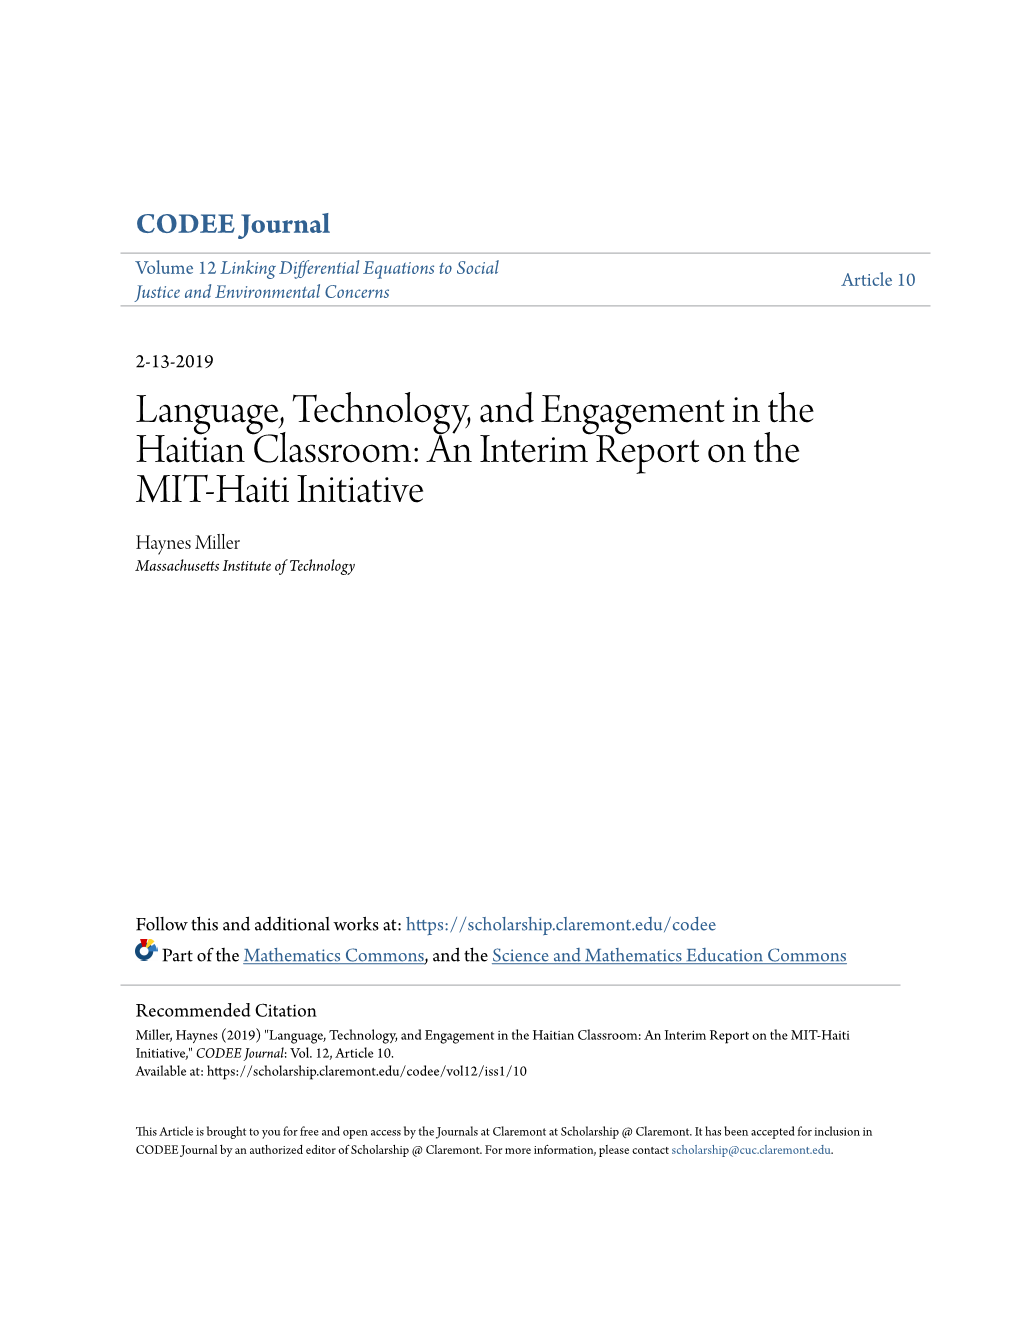 An Interim Report on the MIT-Haiti Initiative Haynes Miller Massachusetts Ni Stitute of Technology